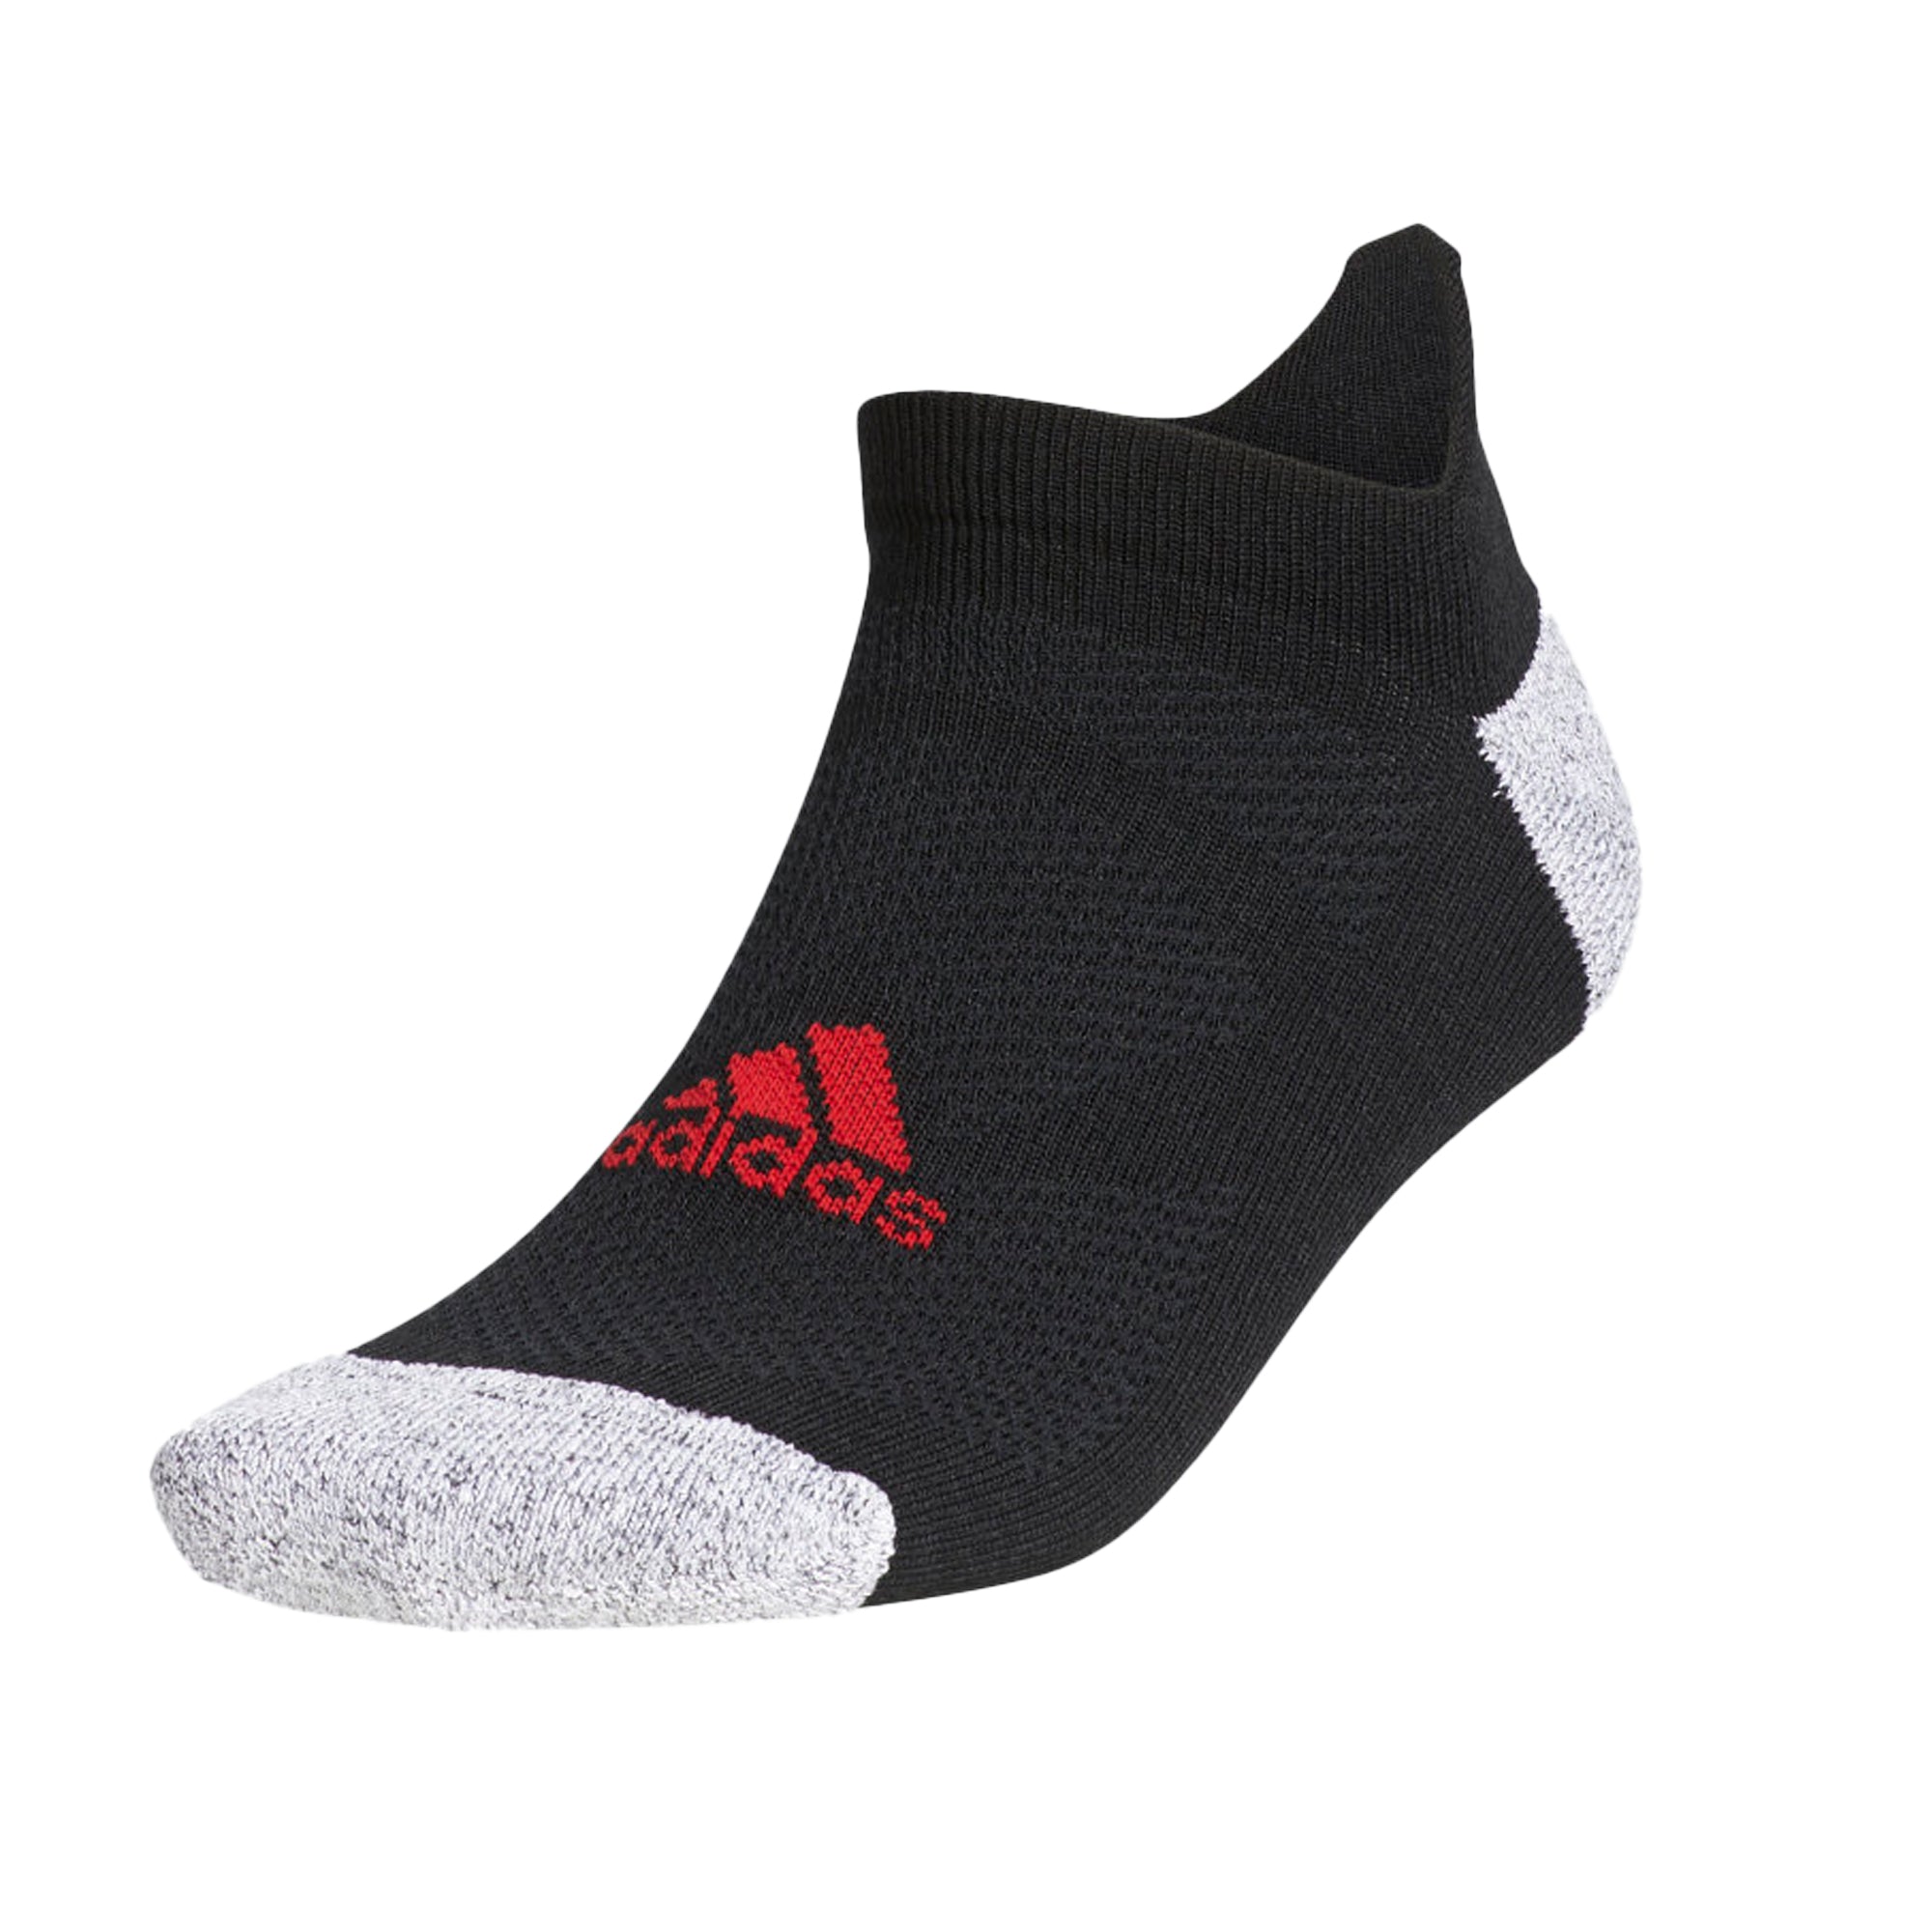 Adidas Tour Ankle Socks